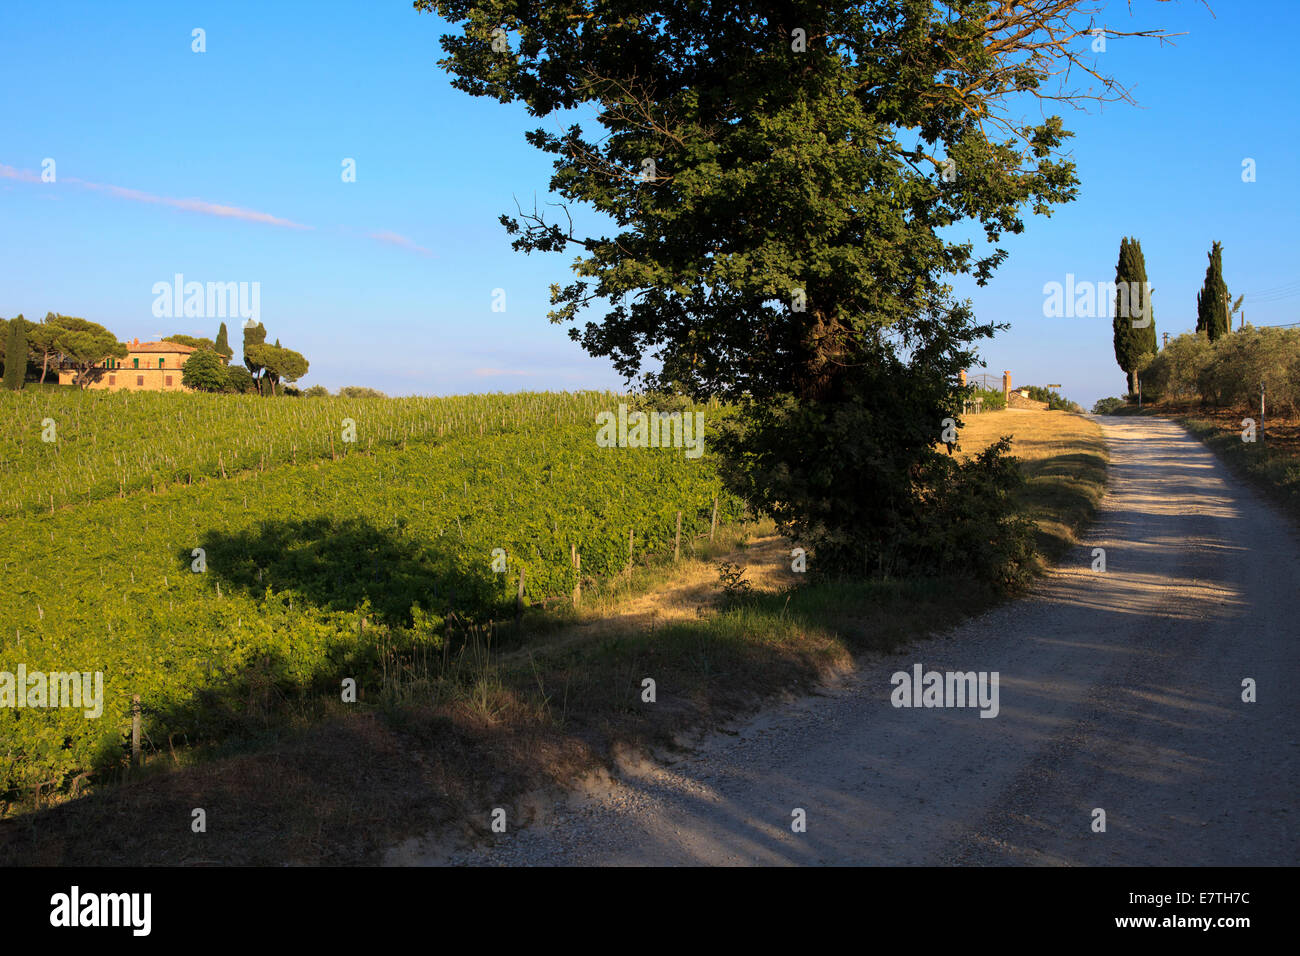 Vineyard, Tavarnelle Val Di Pesa, Chianti Region, Tuscany, Italy Stock Photo